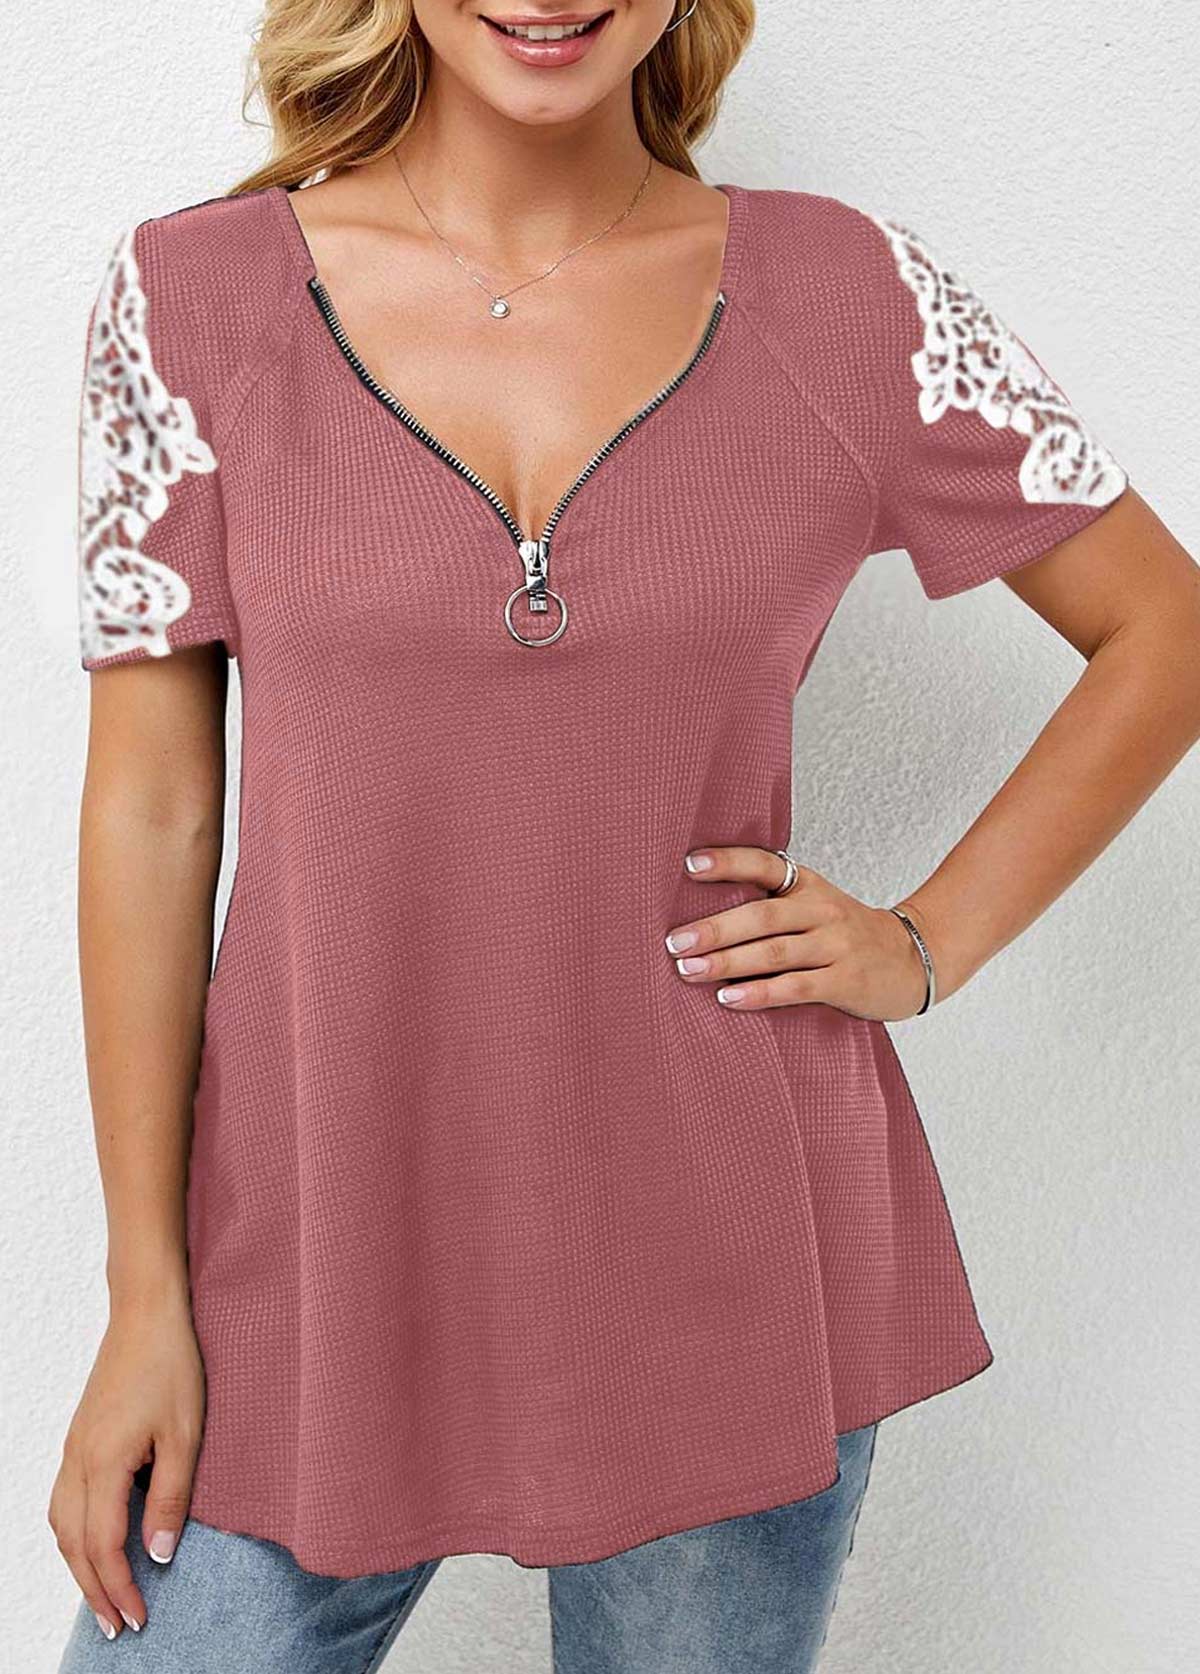 Lace Stitching V Neck Short Sleeve T Shirt | modlily.com - USD 19.99